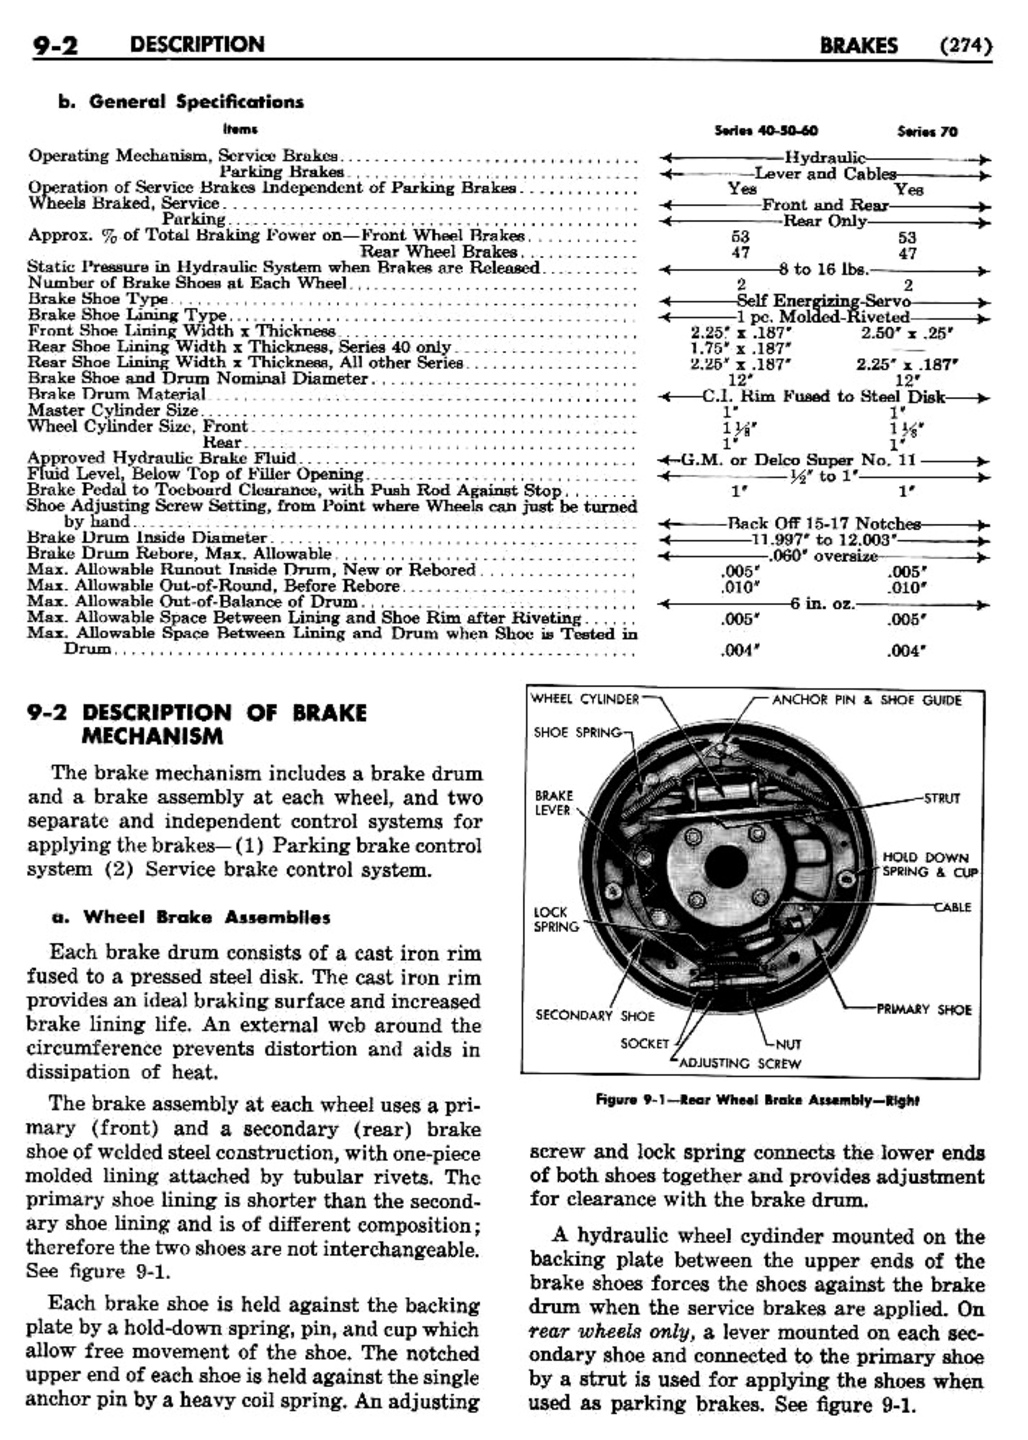 n_10 1955 Buick Shop Manual - Brakes-002-002.jpg